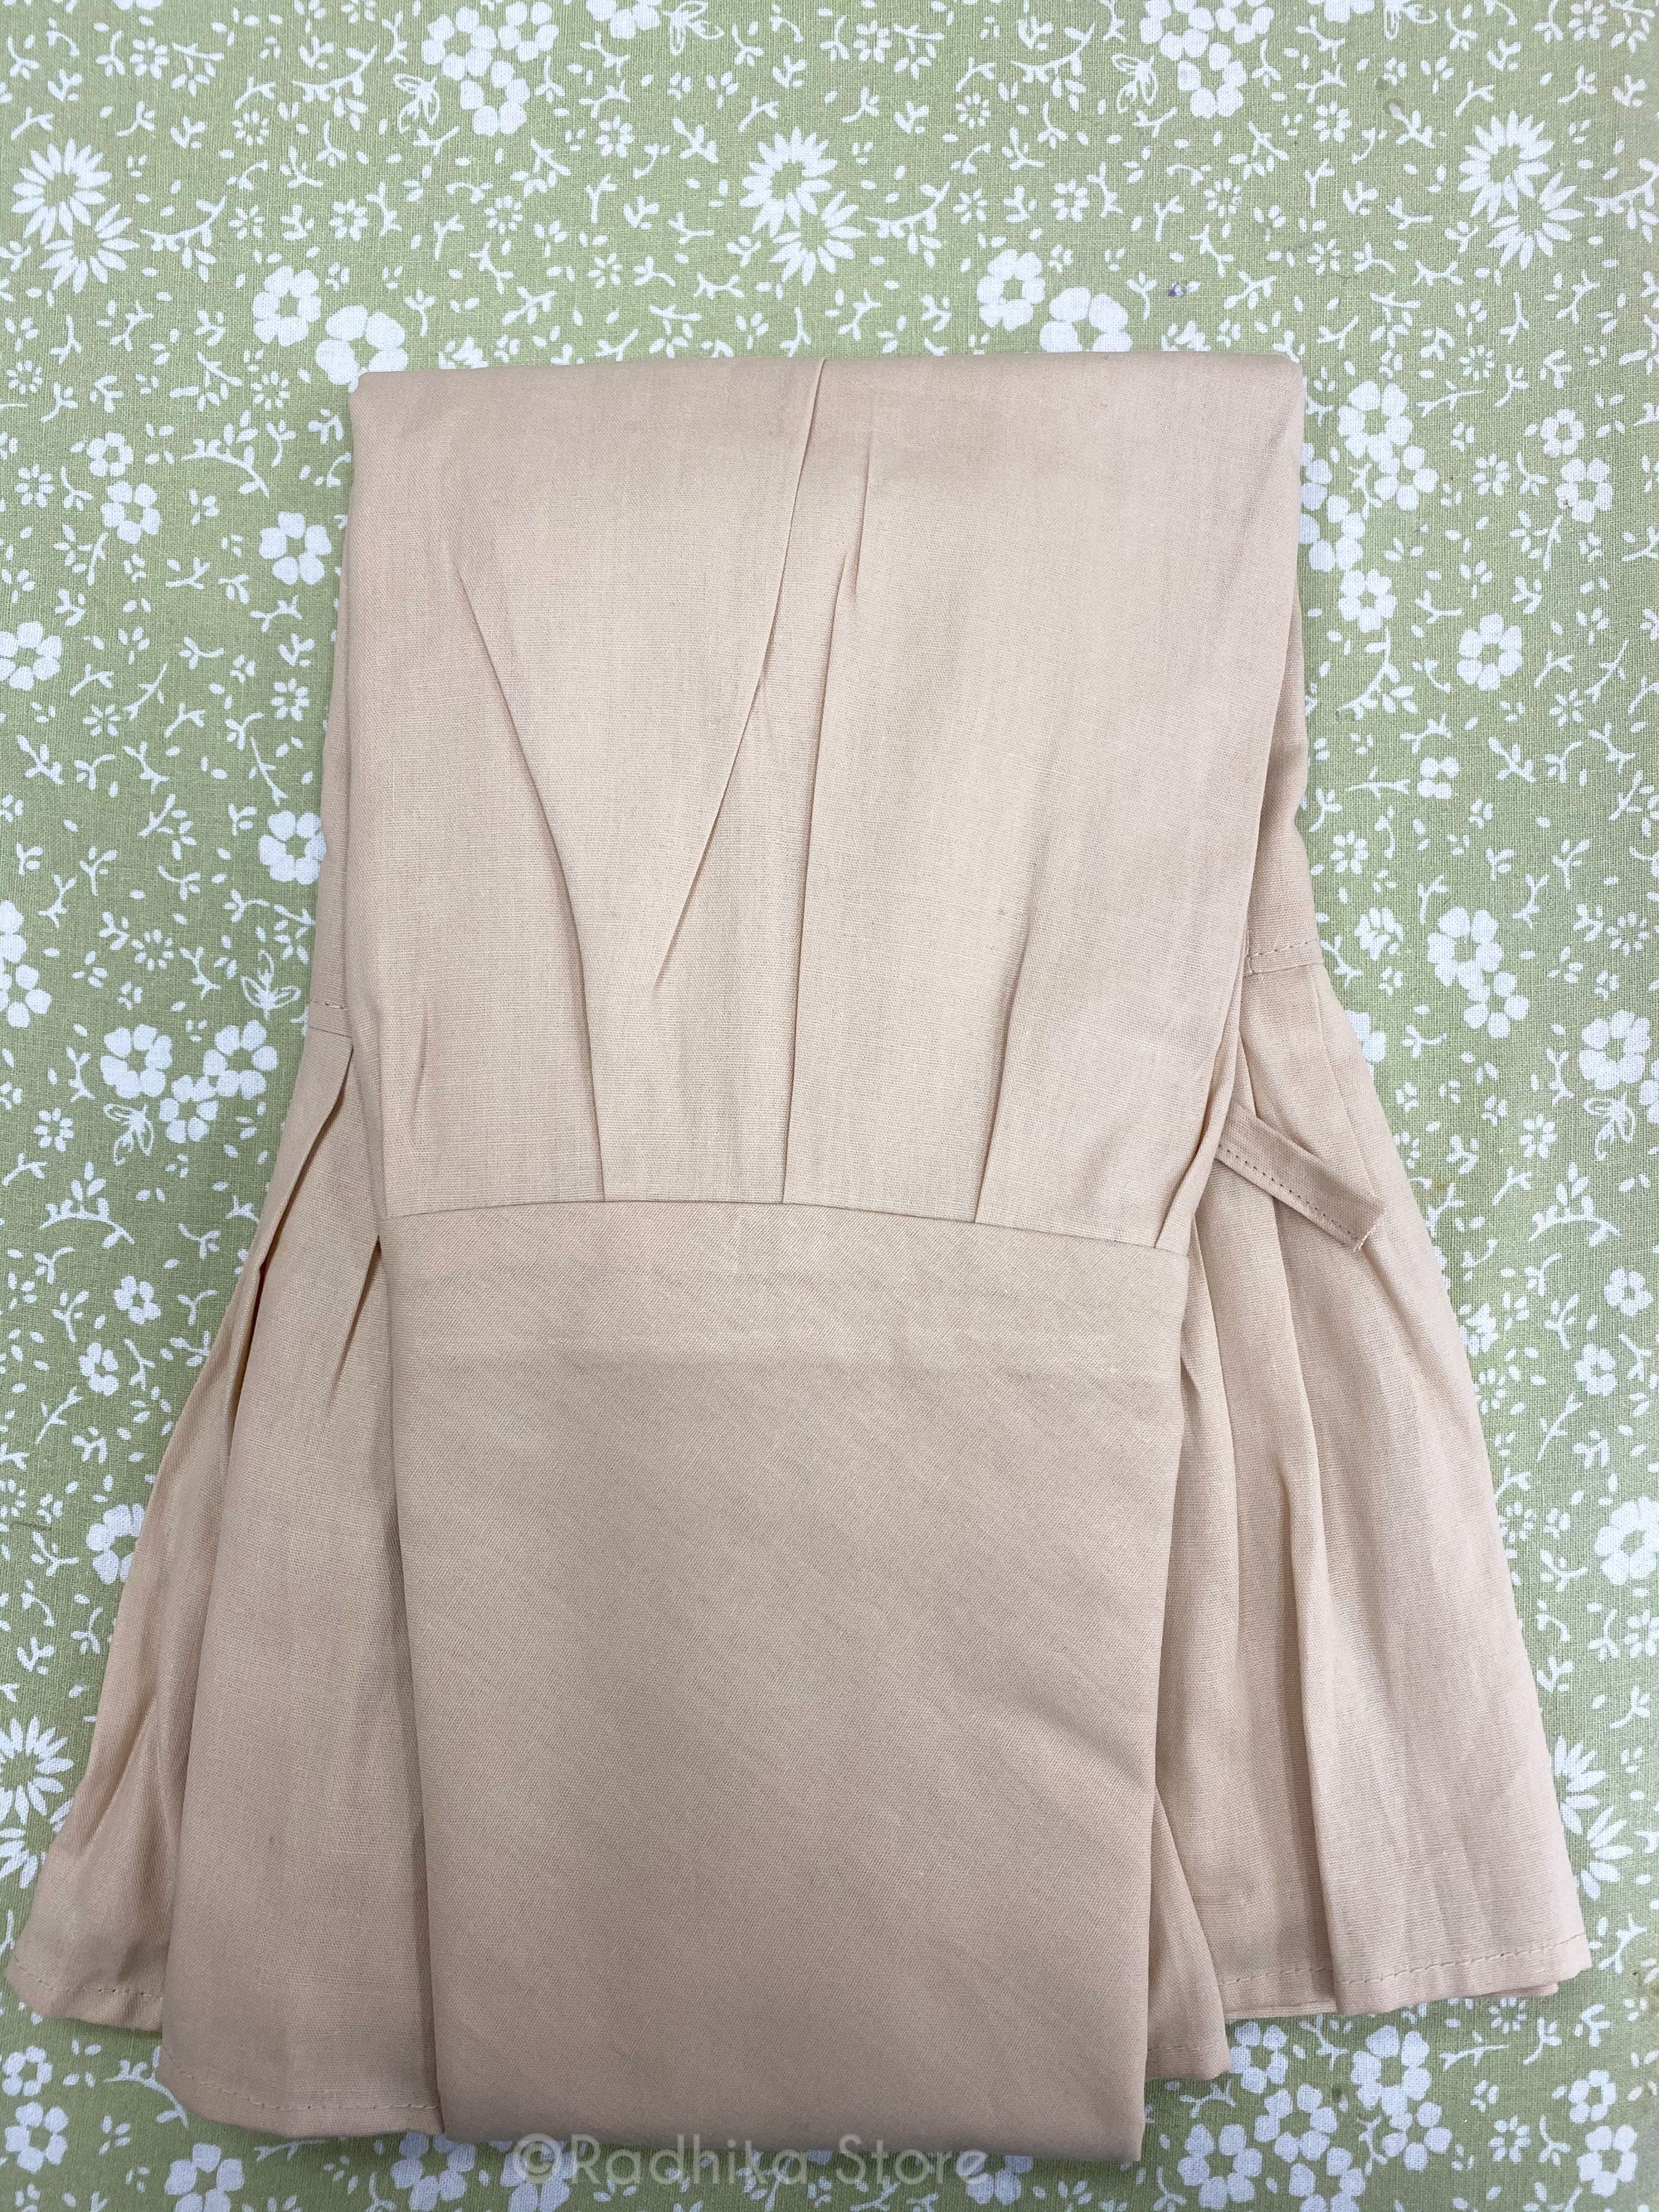 Beige Cotton Petticoat/ Slip - S, M, L, Xl